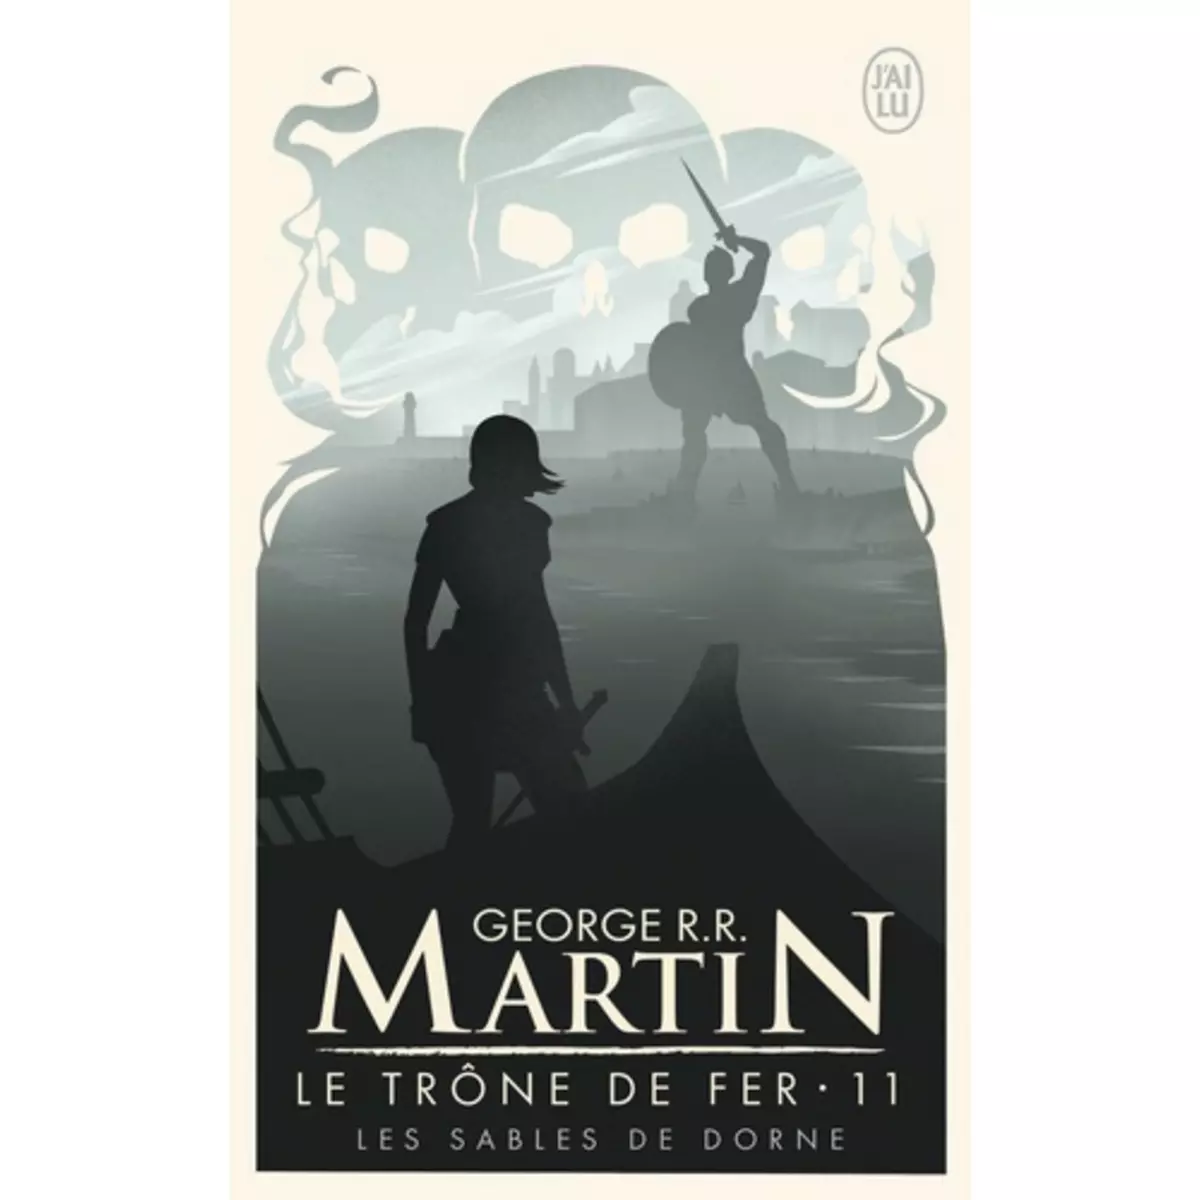  LE TRONE DE FER (A GAME OF THRONES) TOME 11 : LES SABLES DE DORNE, Martin George R. R.